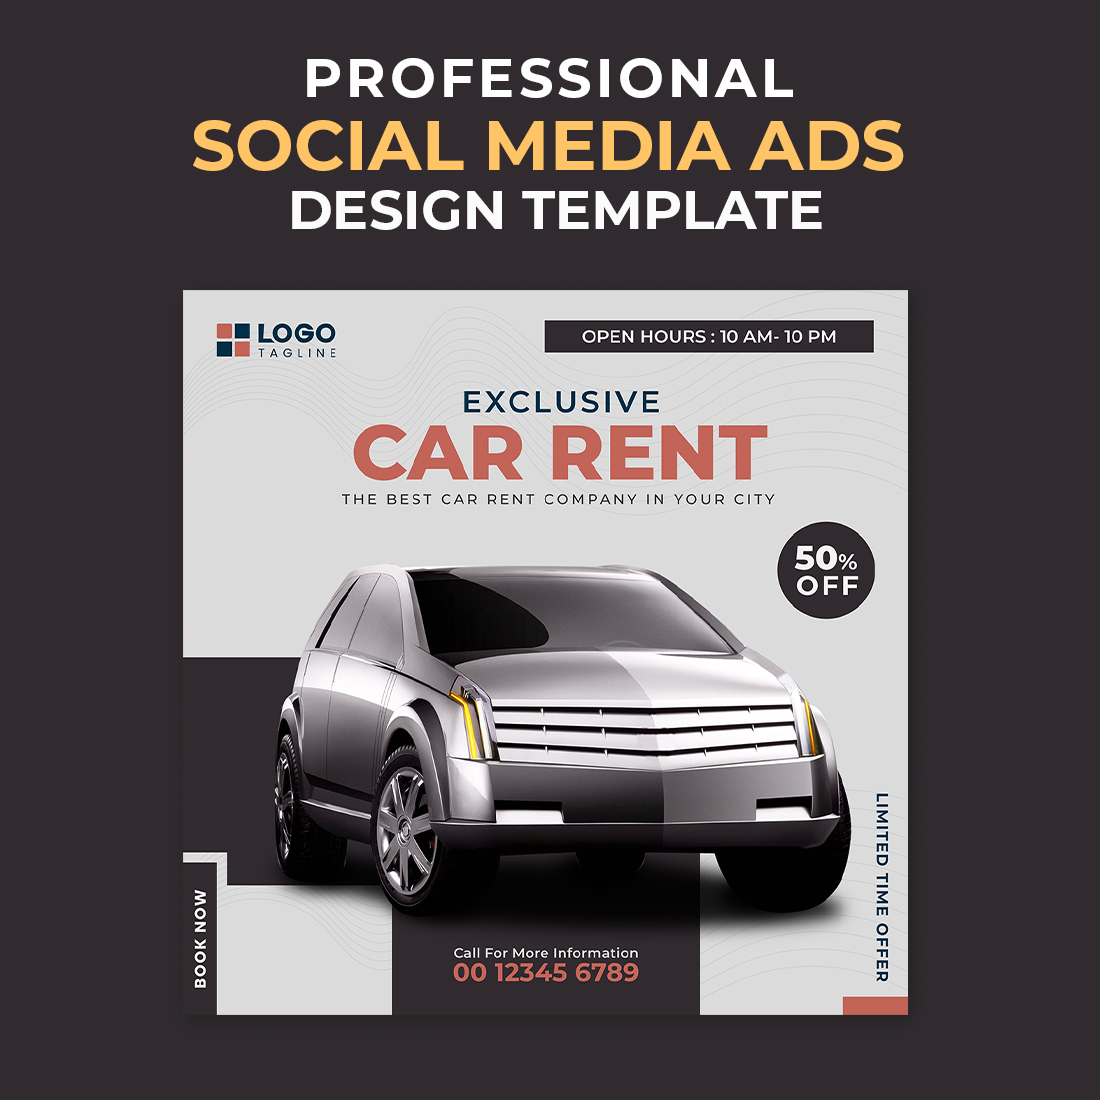 Professional & Creative Modern Car Rent Social Media Ads Banner Design Template cover image.